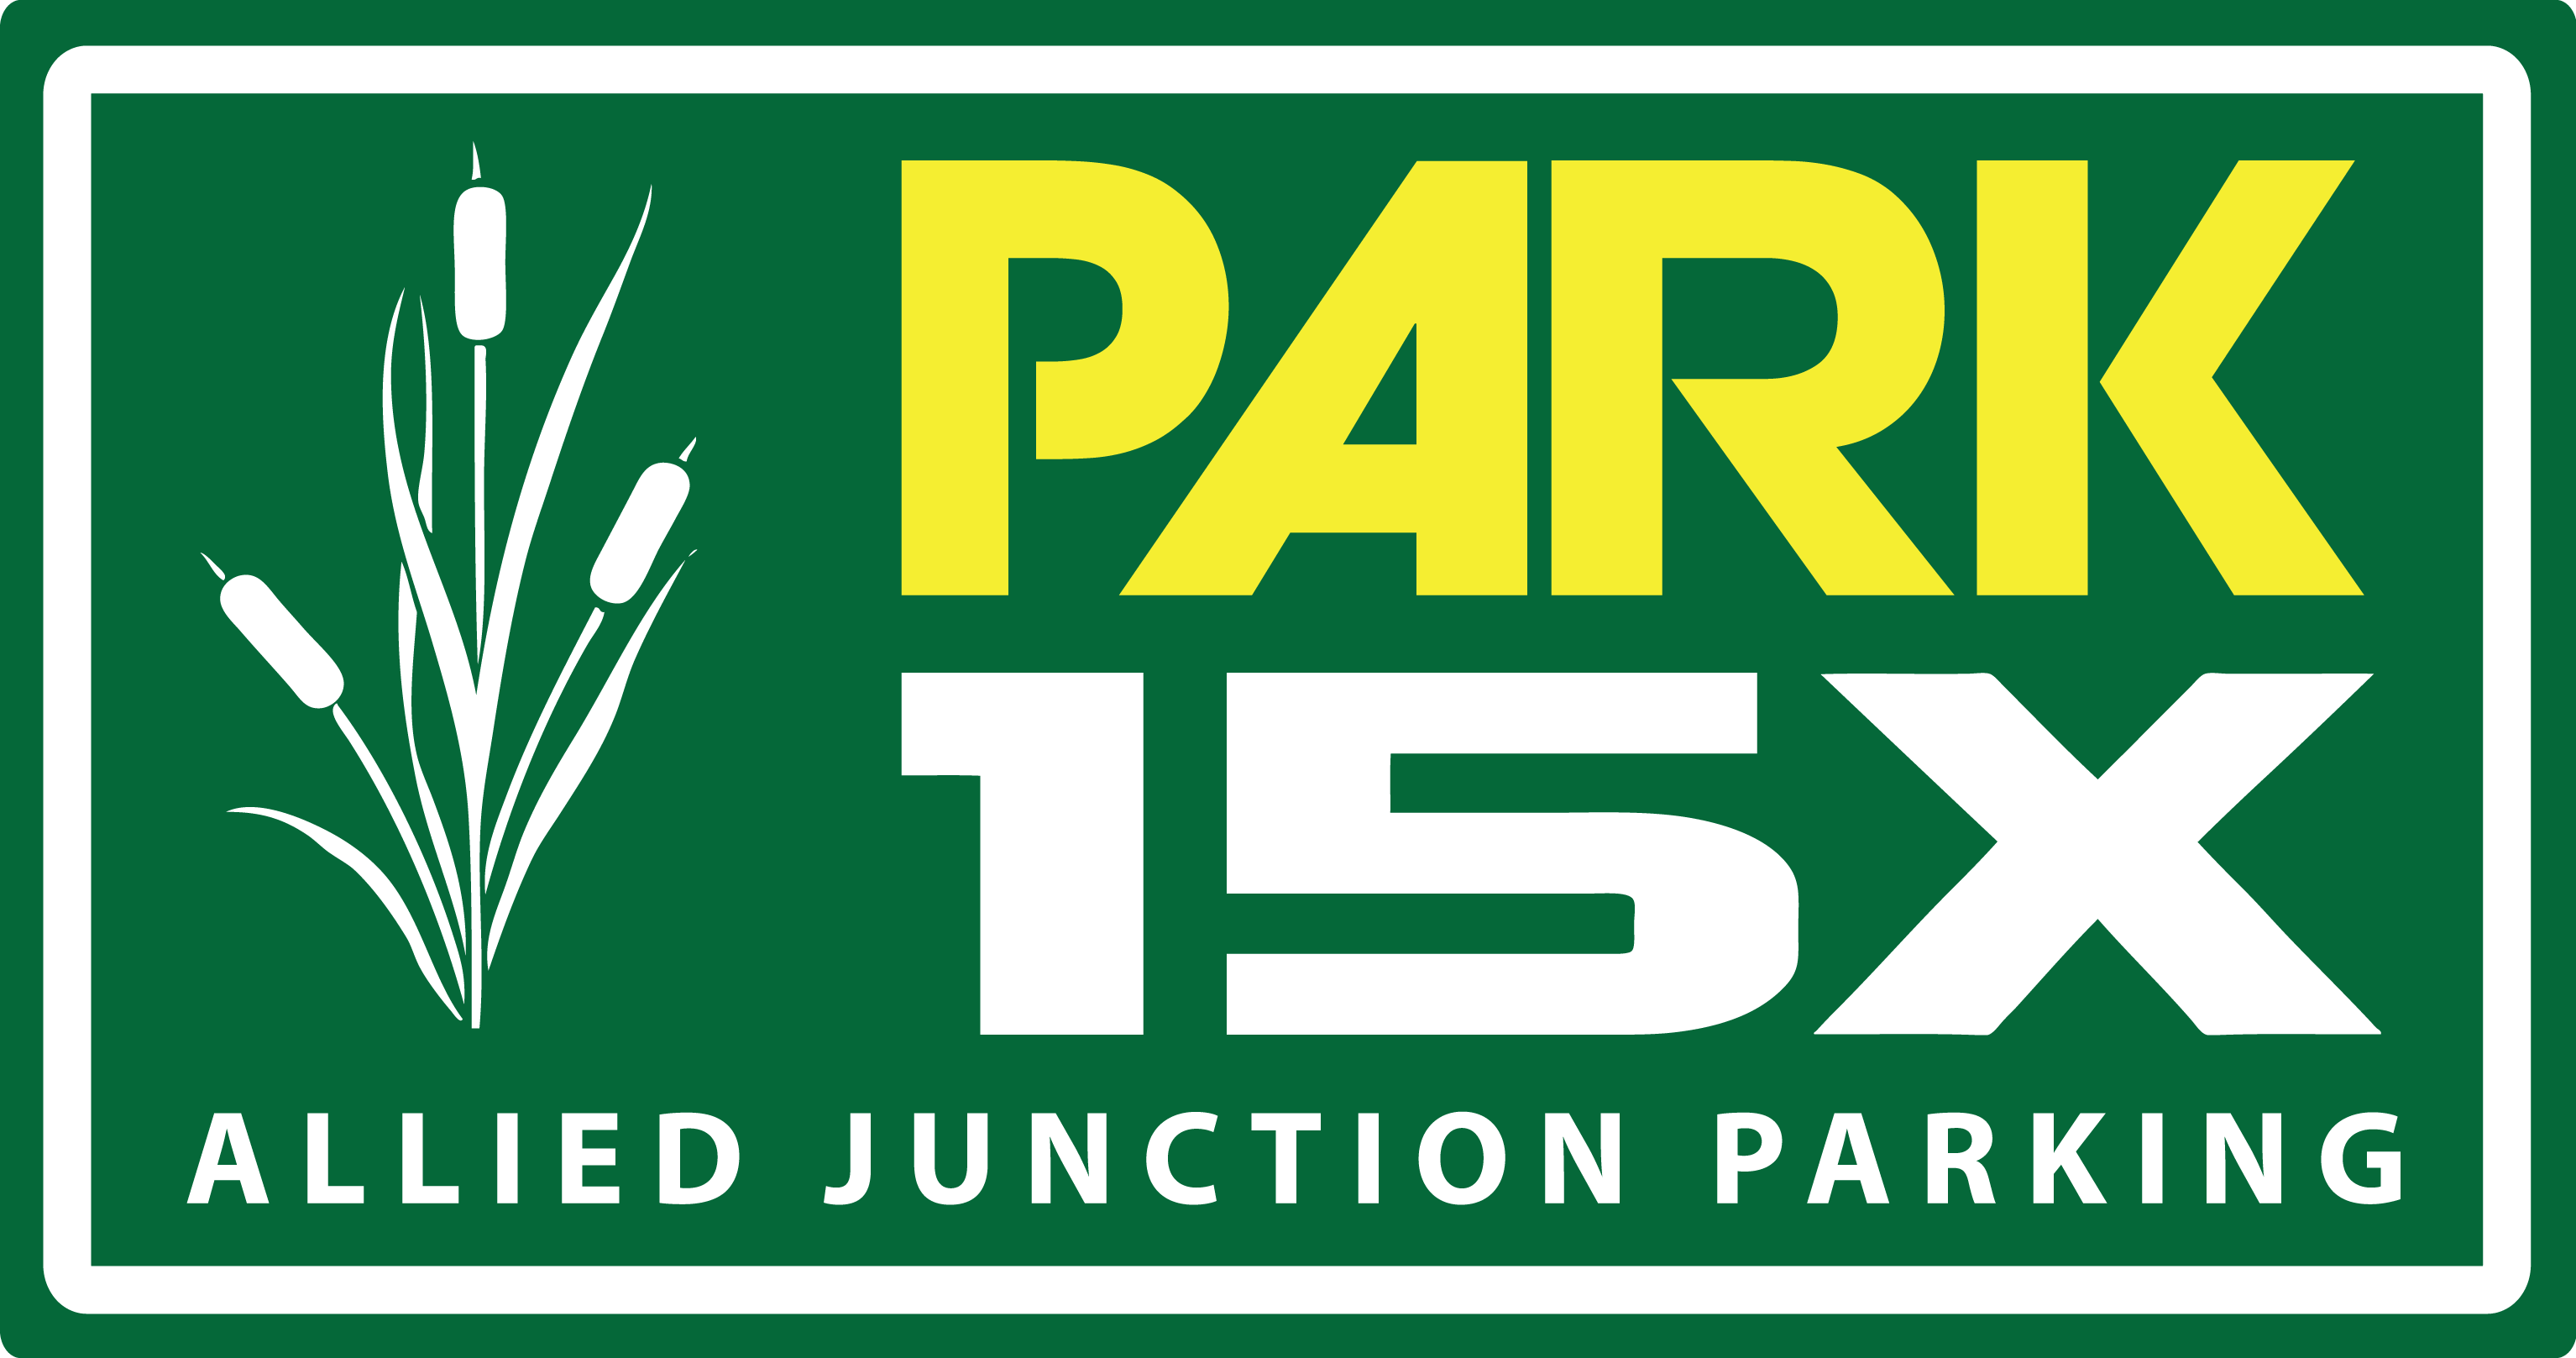 15X Parking